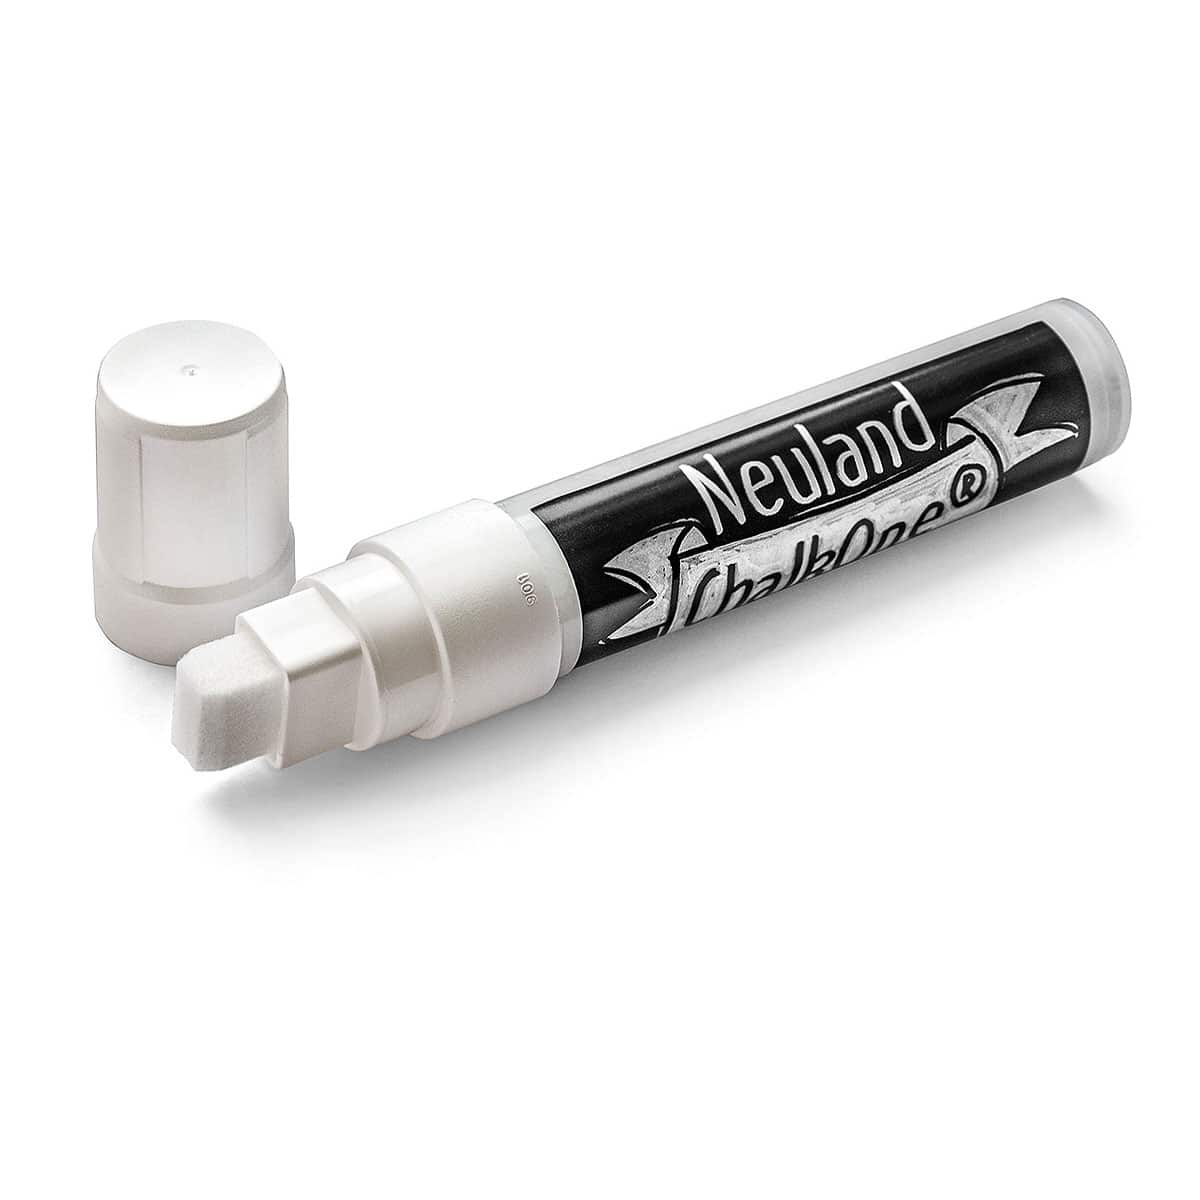 Neuland ChalkOne®, wedge nib 5-15 mm – single colors- c501 weiß